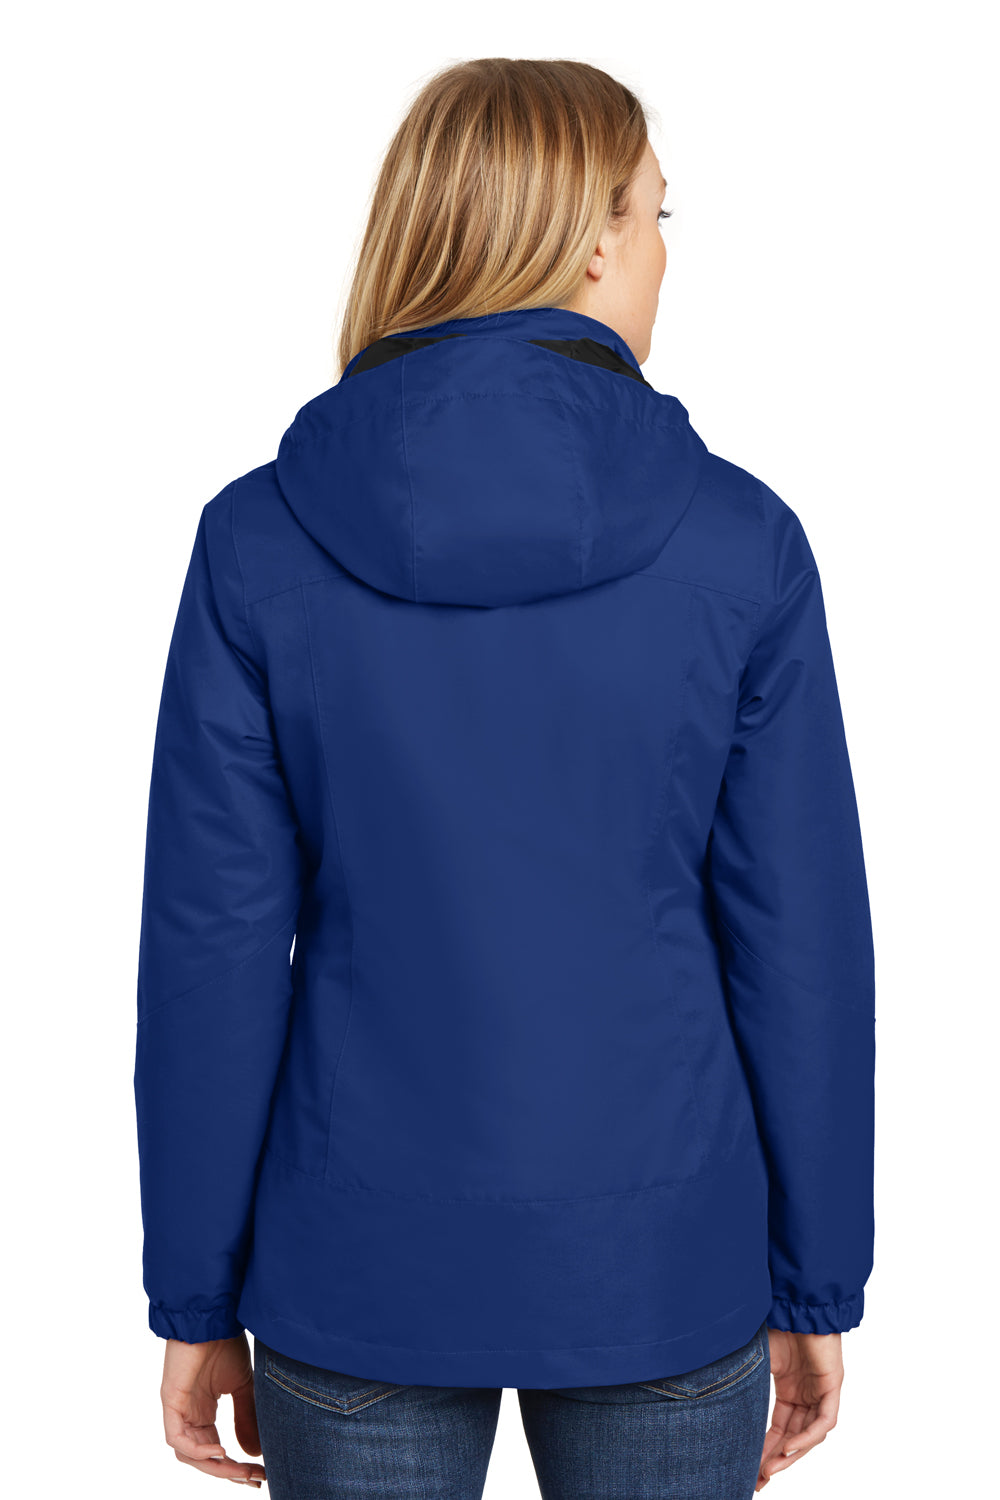 Port Authority L332 Womens Vortex 3-in-1 Waterproof Full Zip Hooded Jacket Night Blue/Black Back